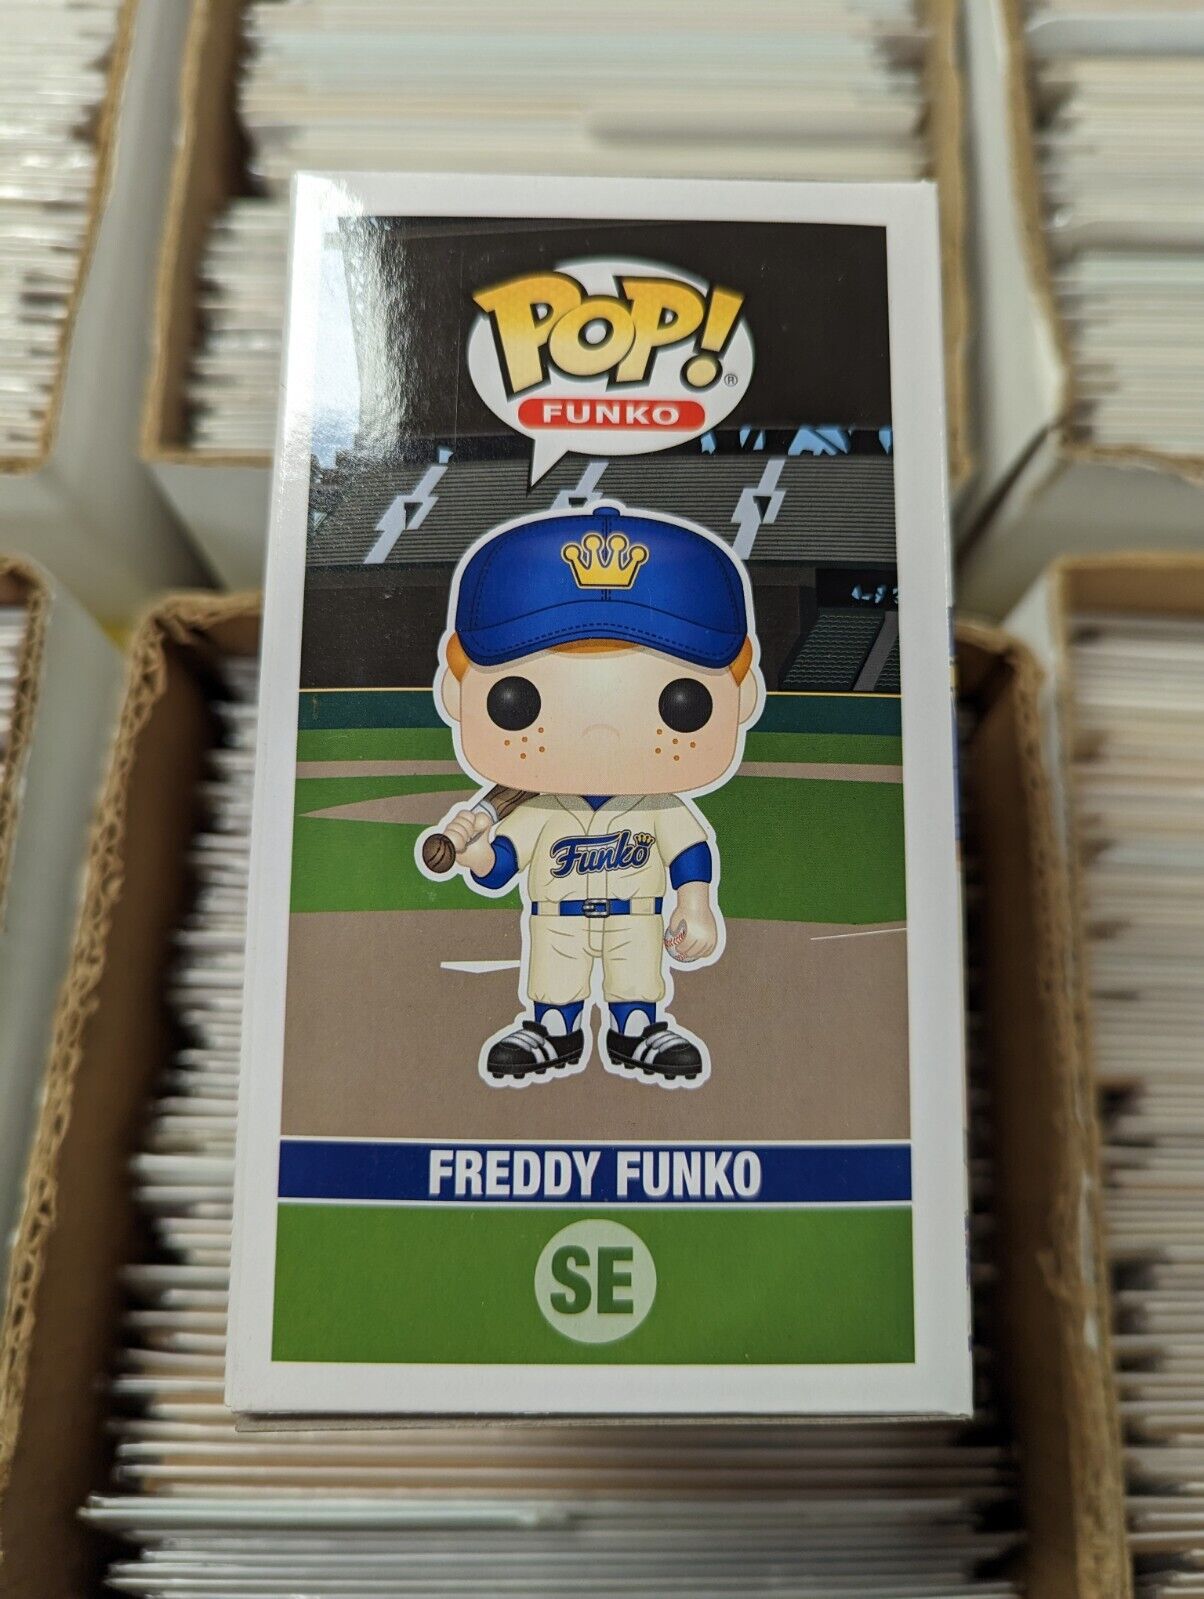 Funko Pop Freddy Funko SE Baseball Uniform 2018 Spring Convention